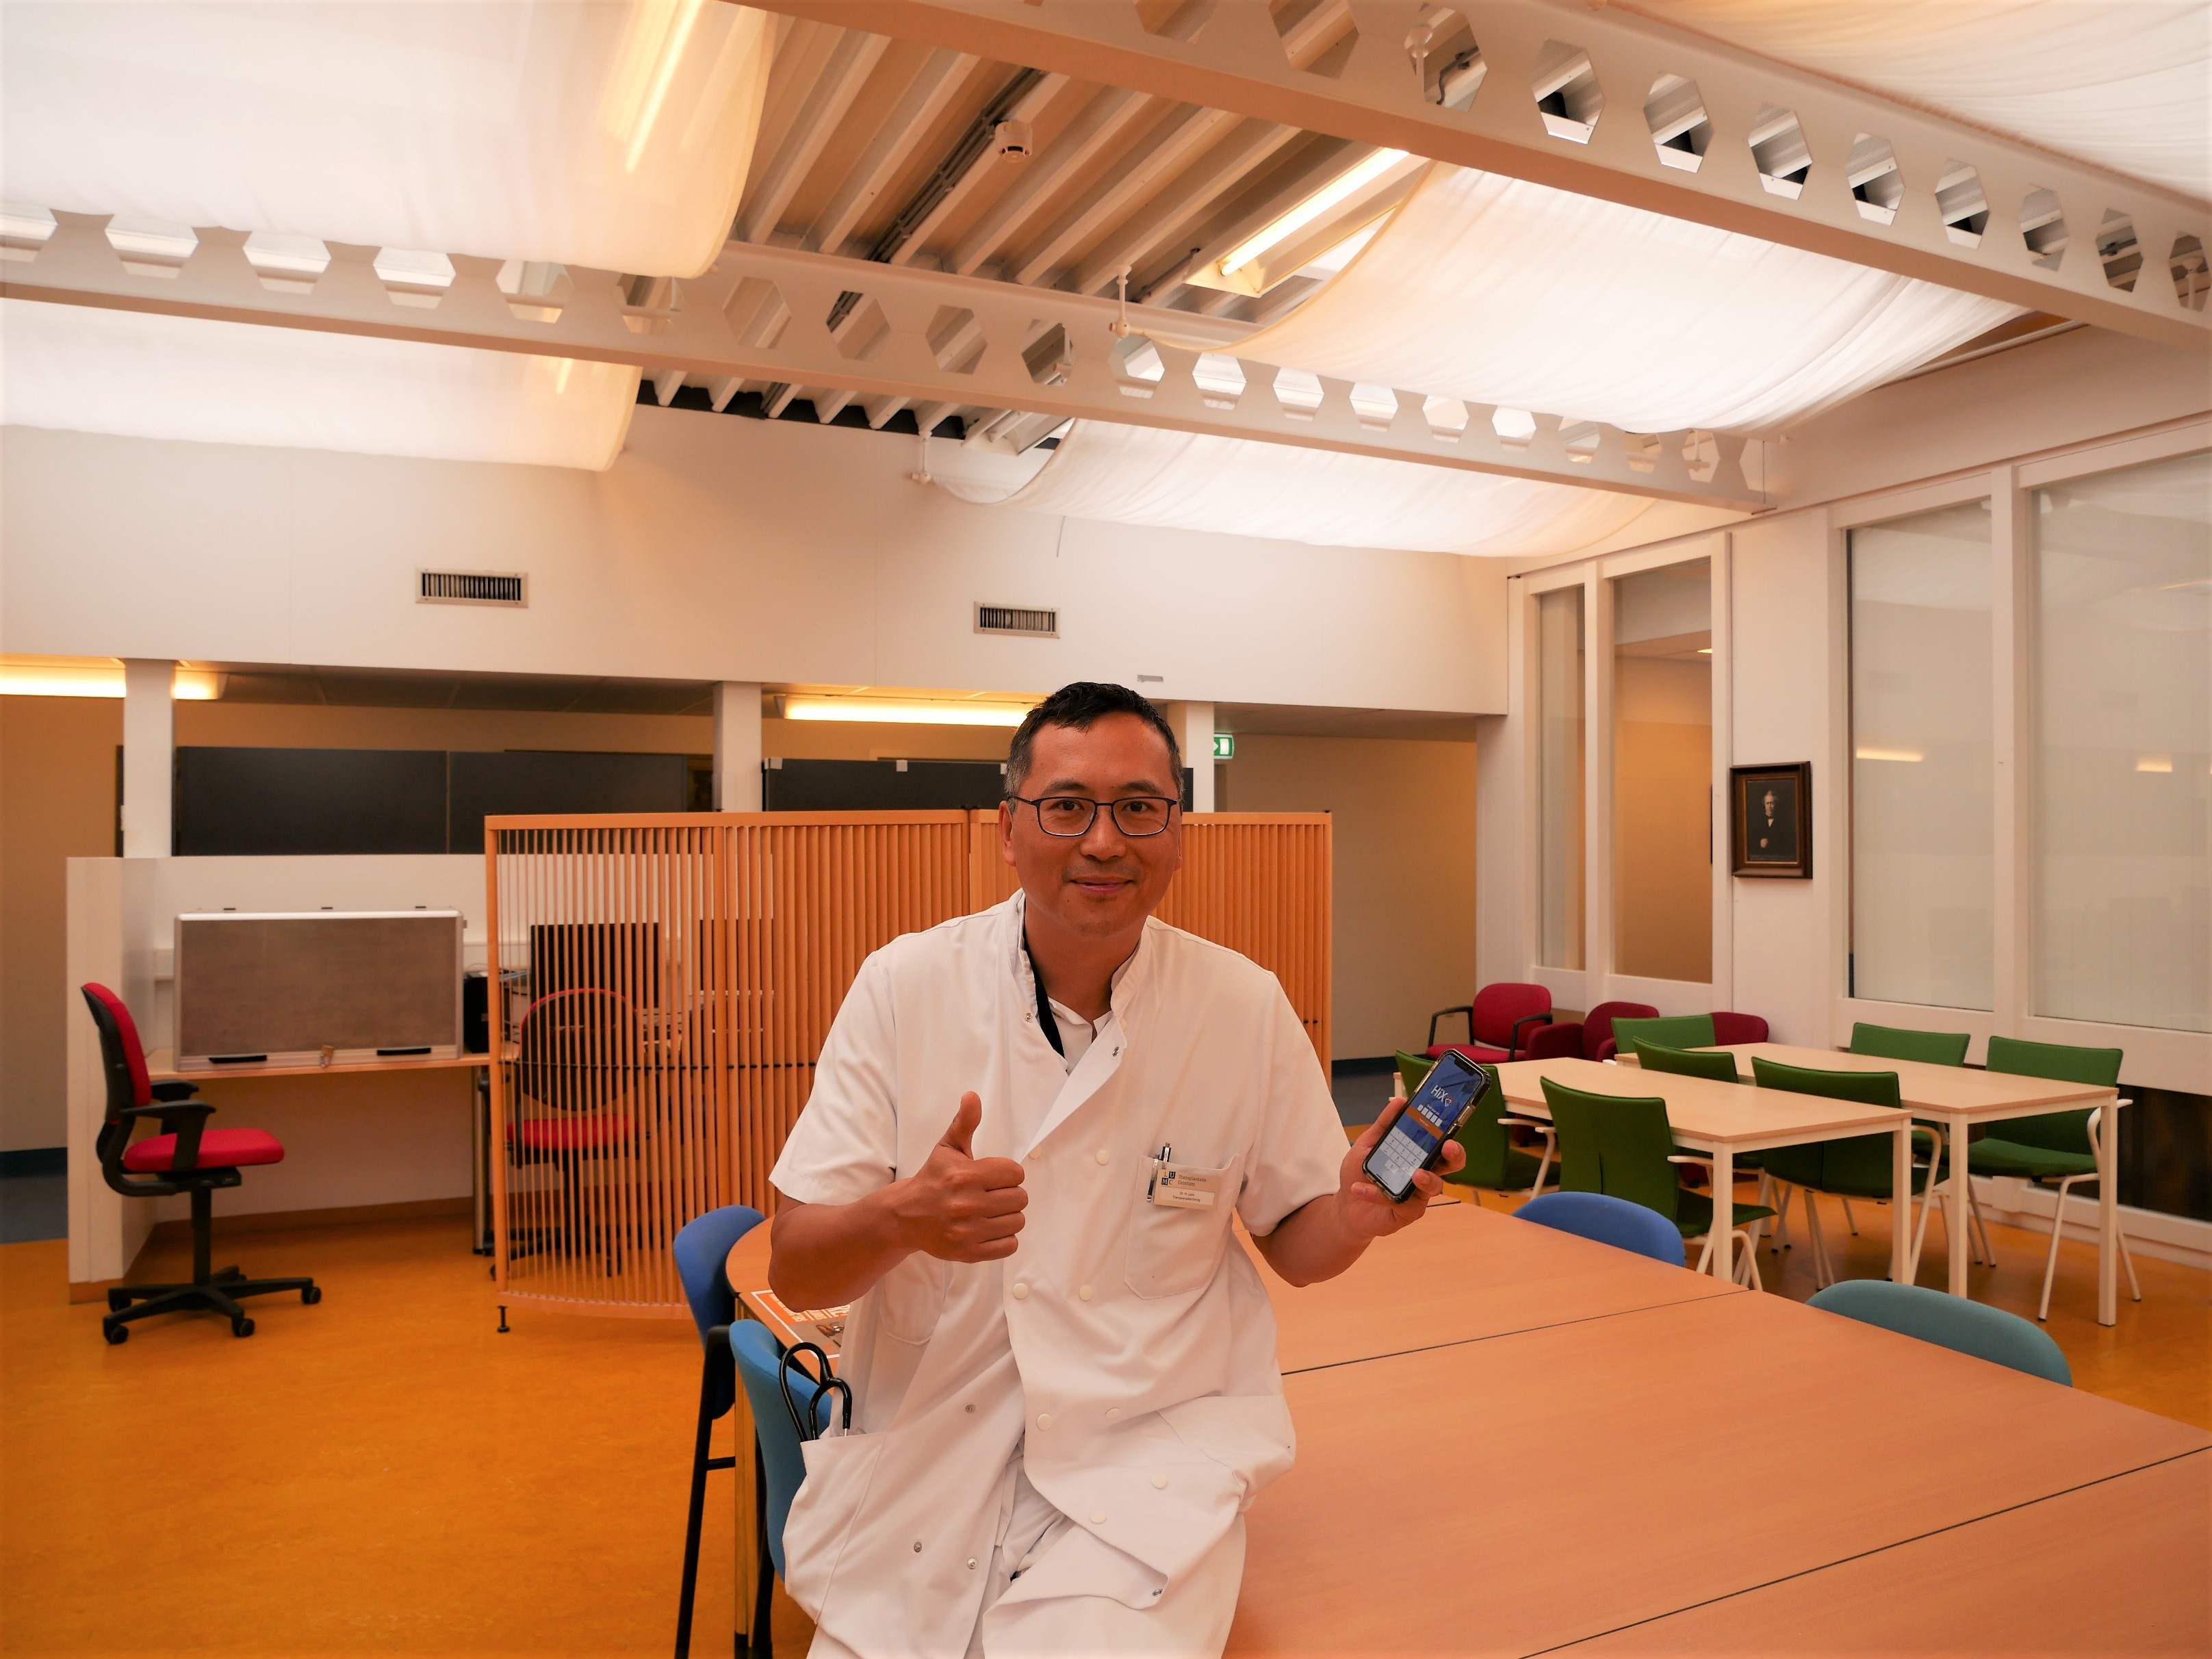 David Lam, Transplant Surgeon at LUMC